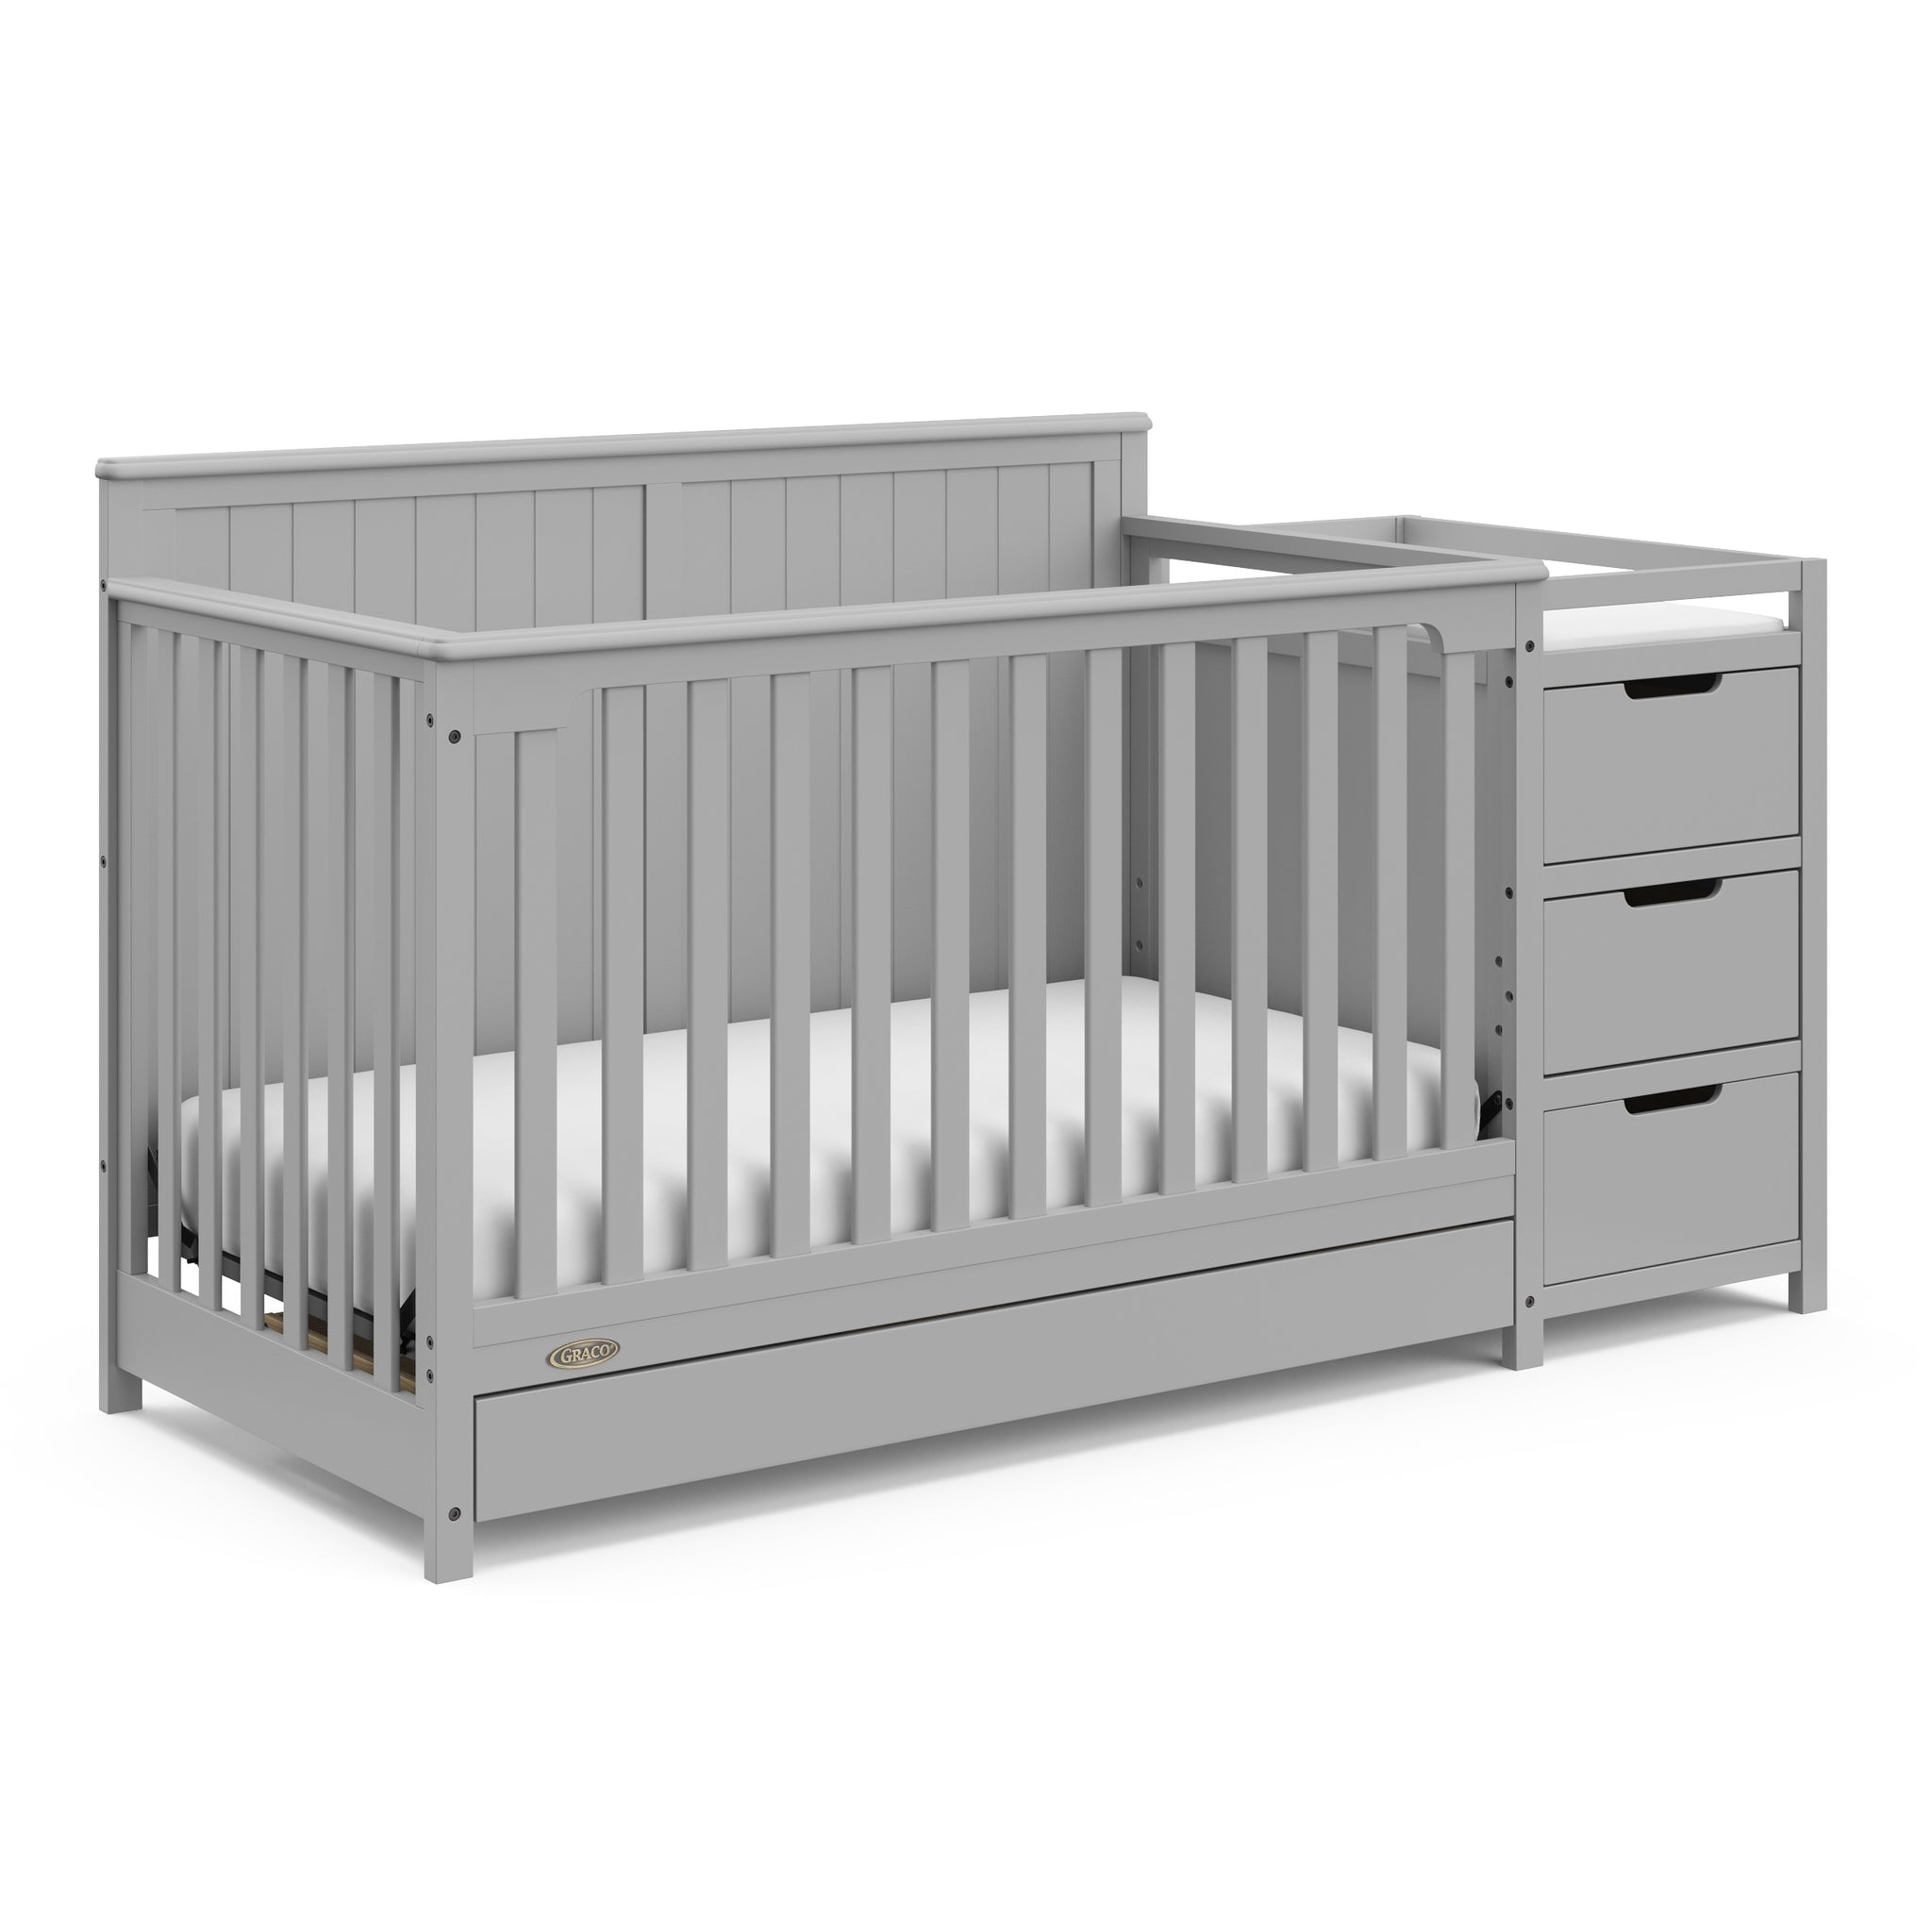  Pebble gray crib and changer with drawer angled